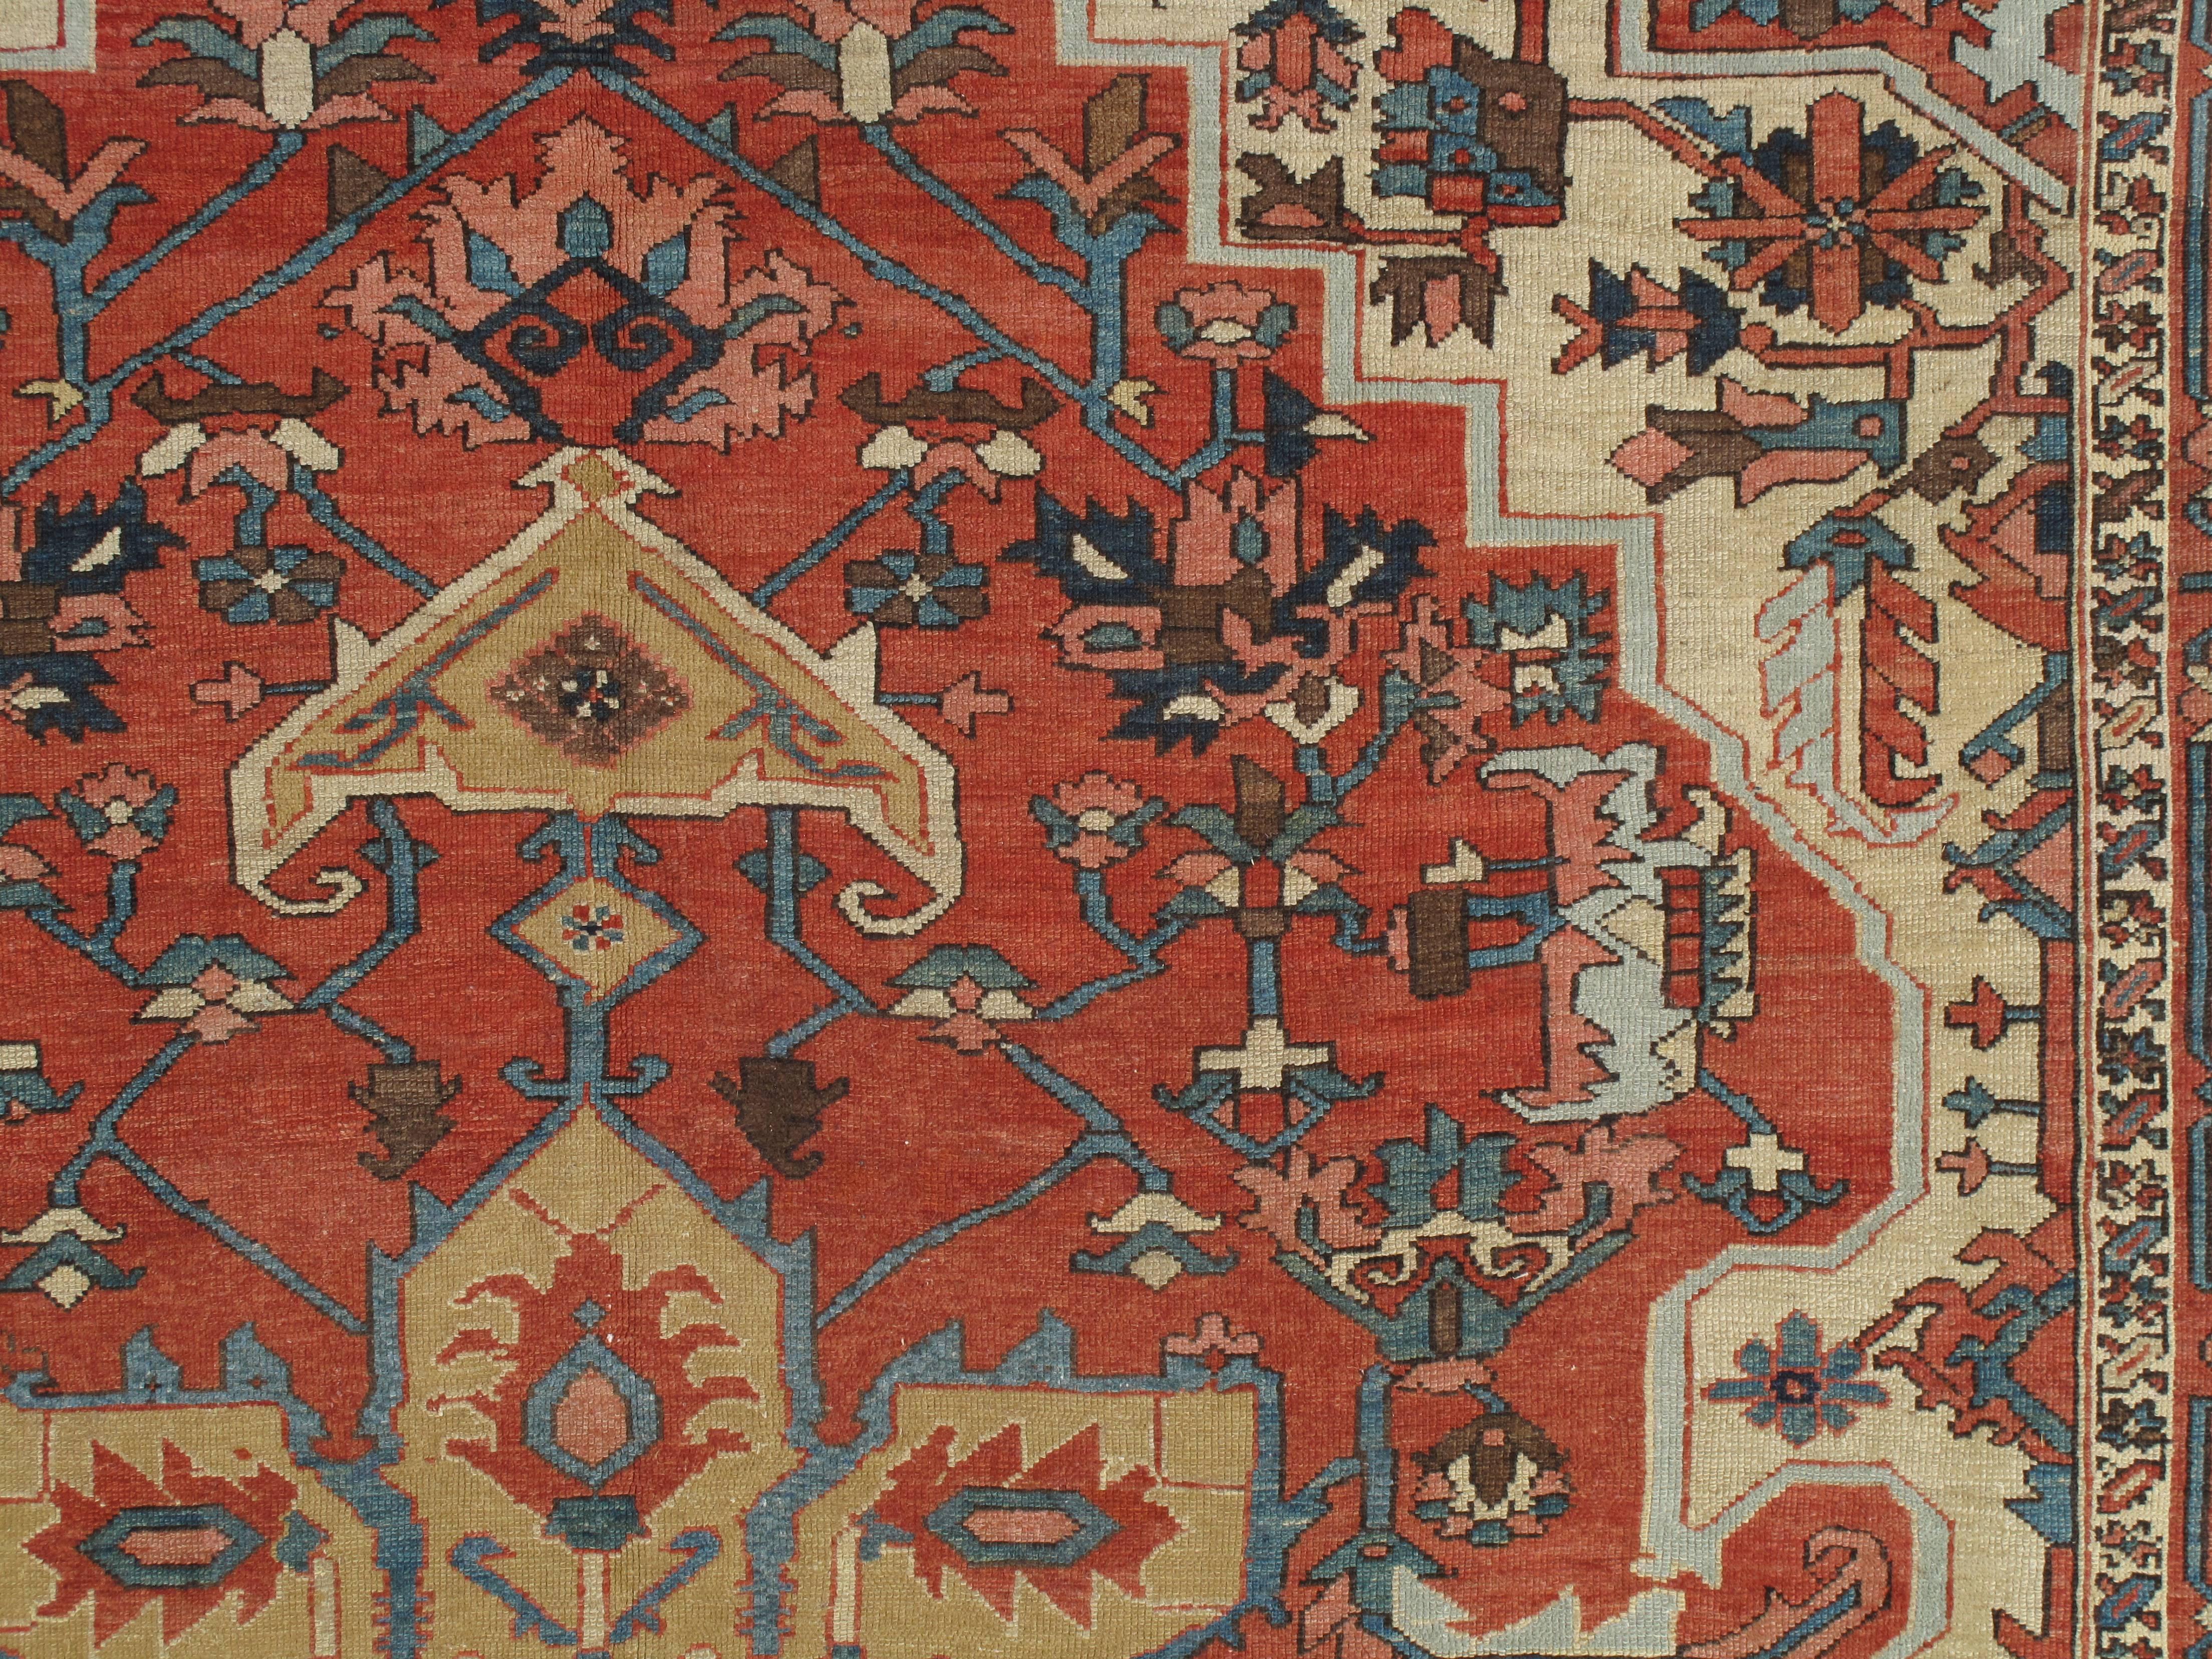 Early 20th Century Antique Persian Handmade Wool Oriental Serapi Carpet, Rust, Gold, Light Blue